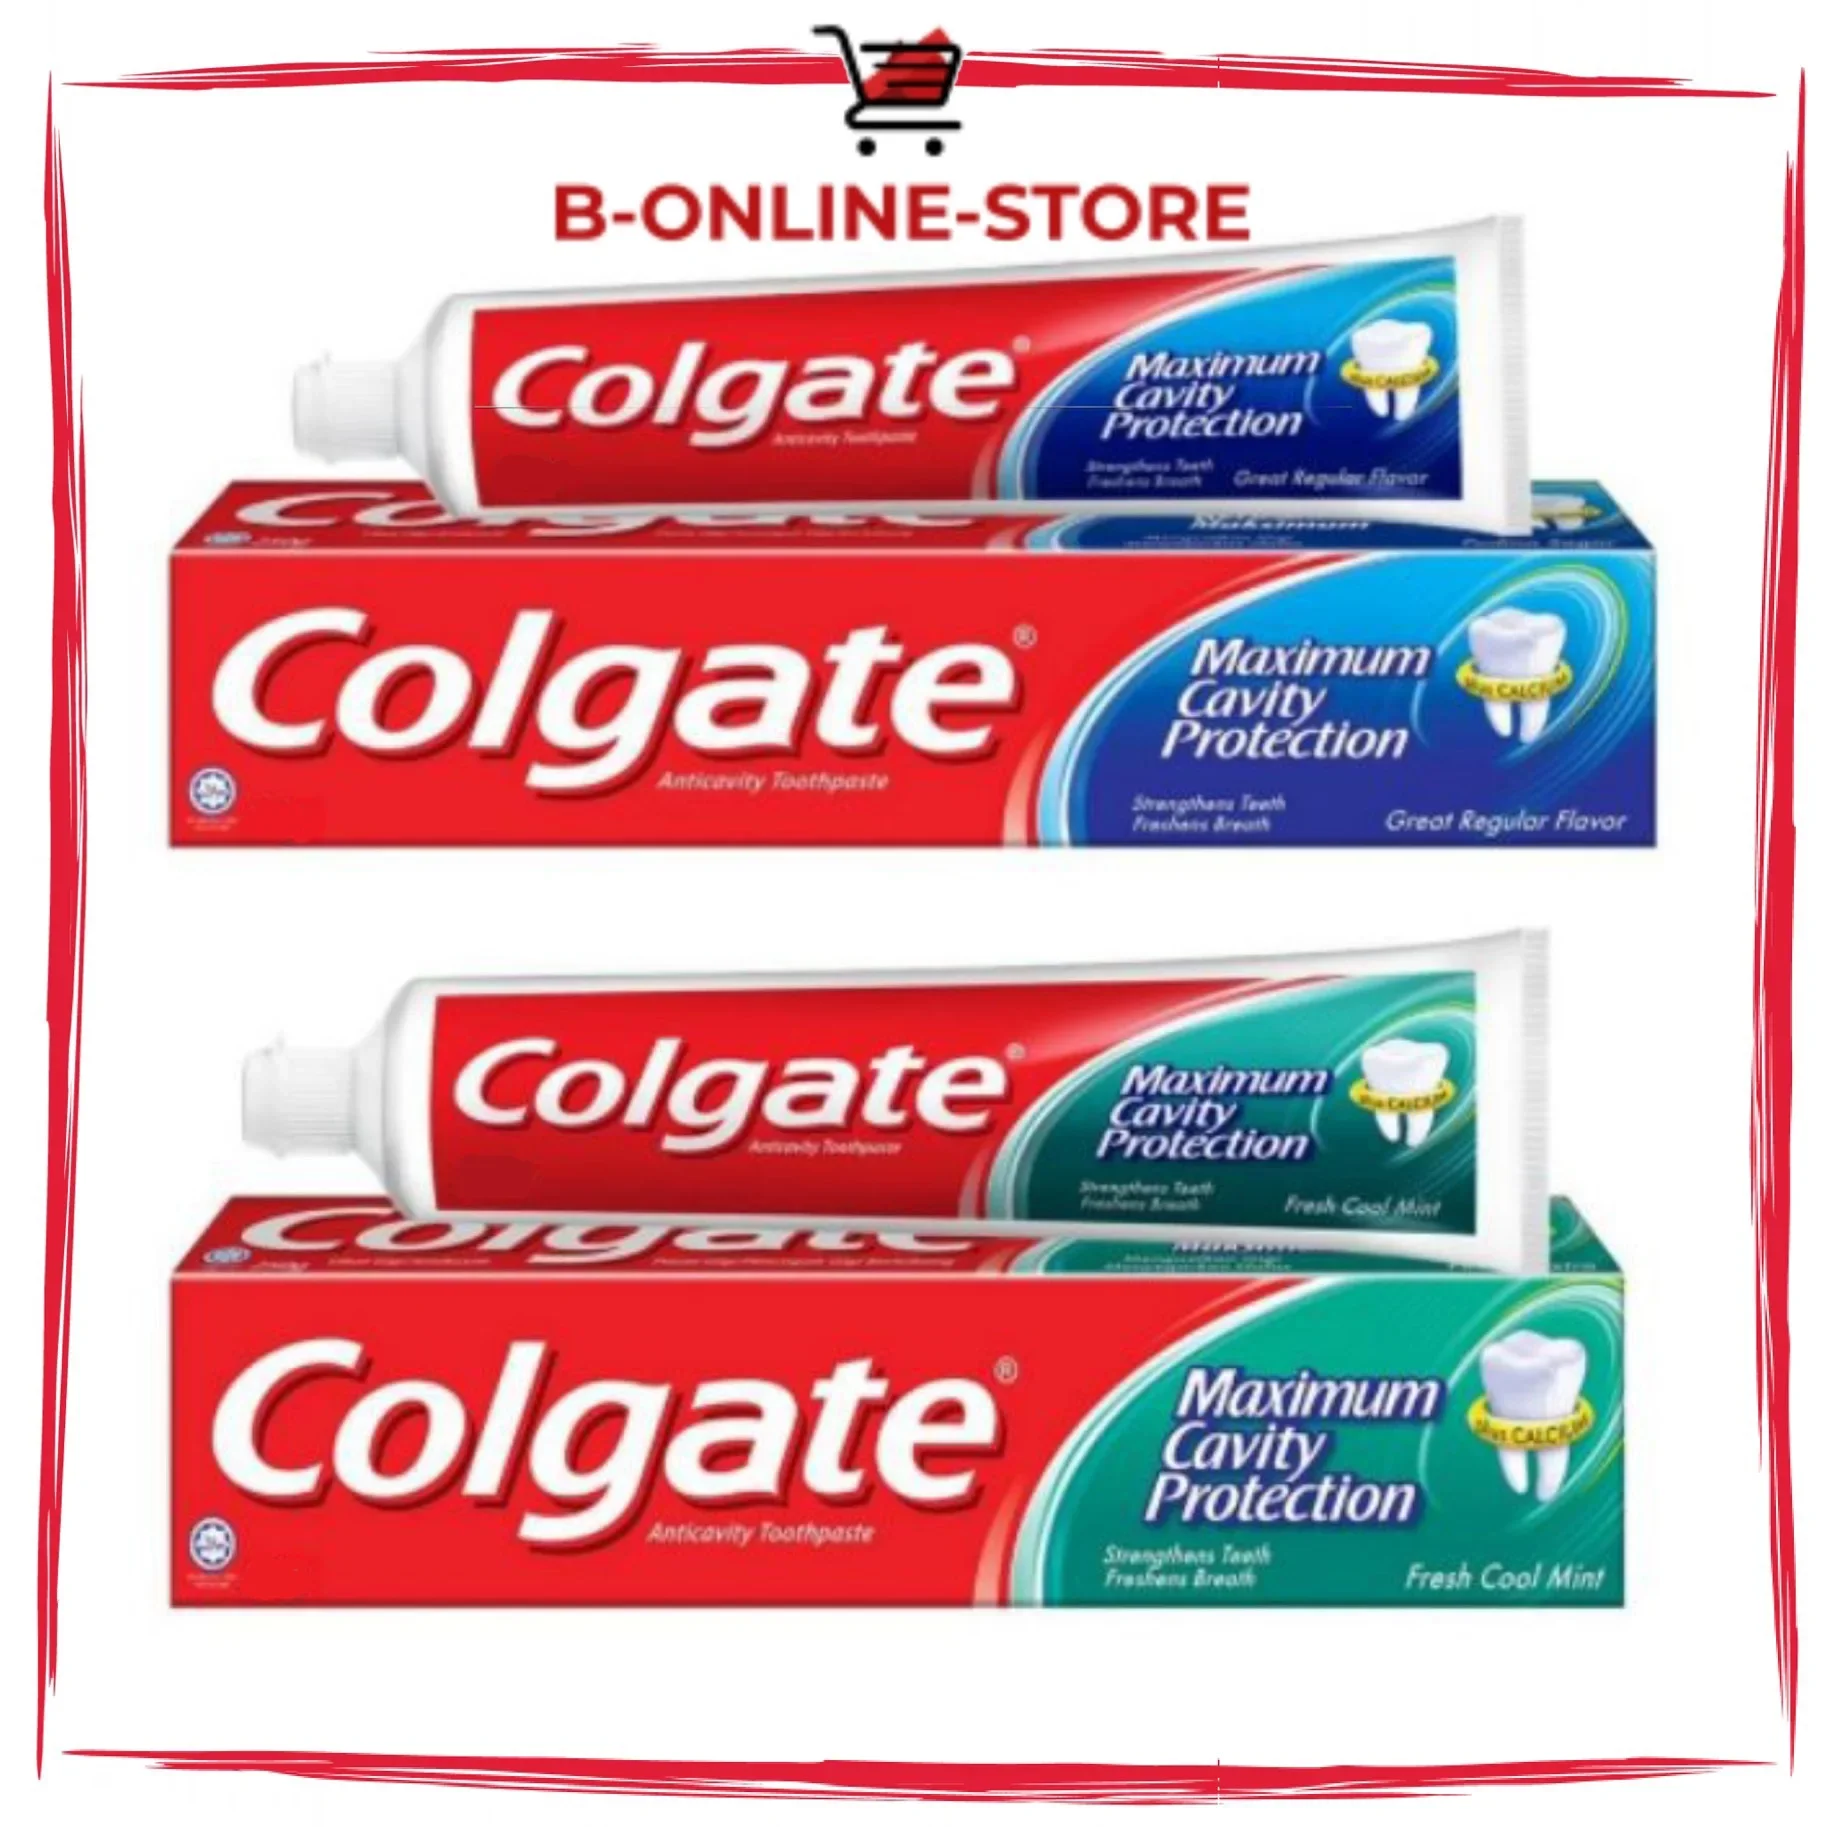 Colgate Anti cavity Toothpaste 175g / Ubat Gigi 175g